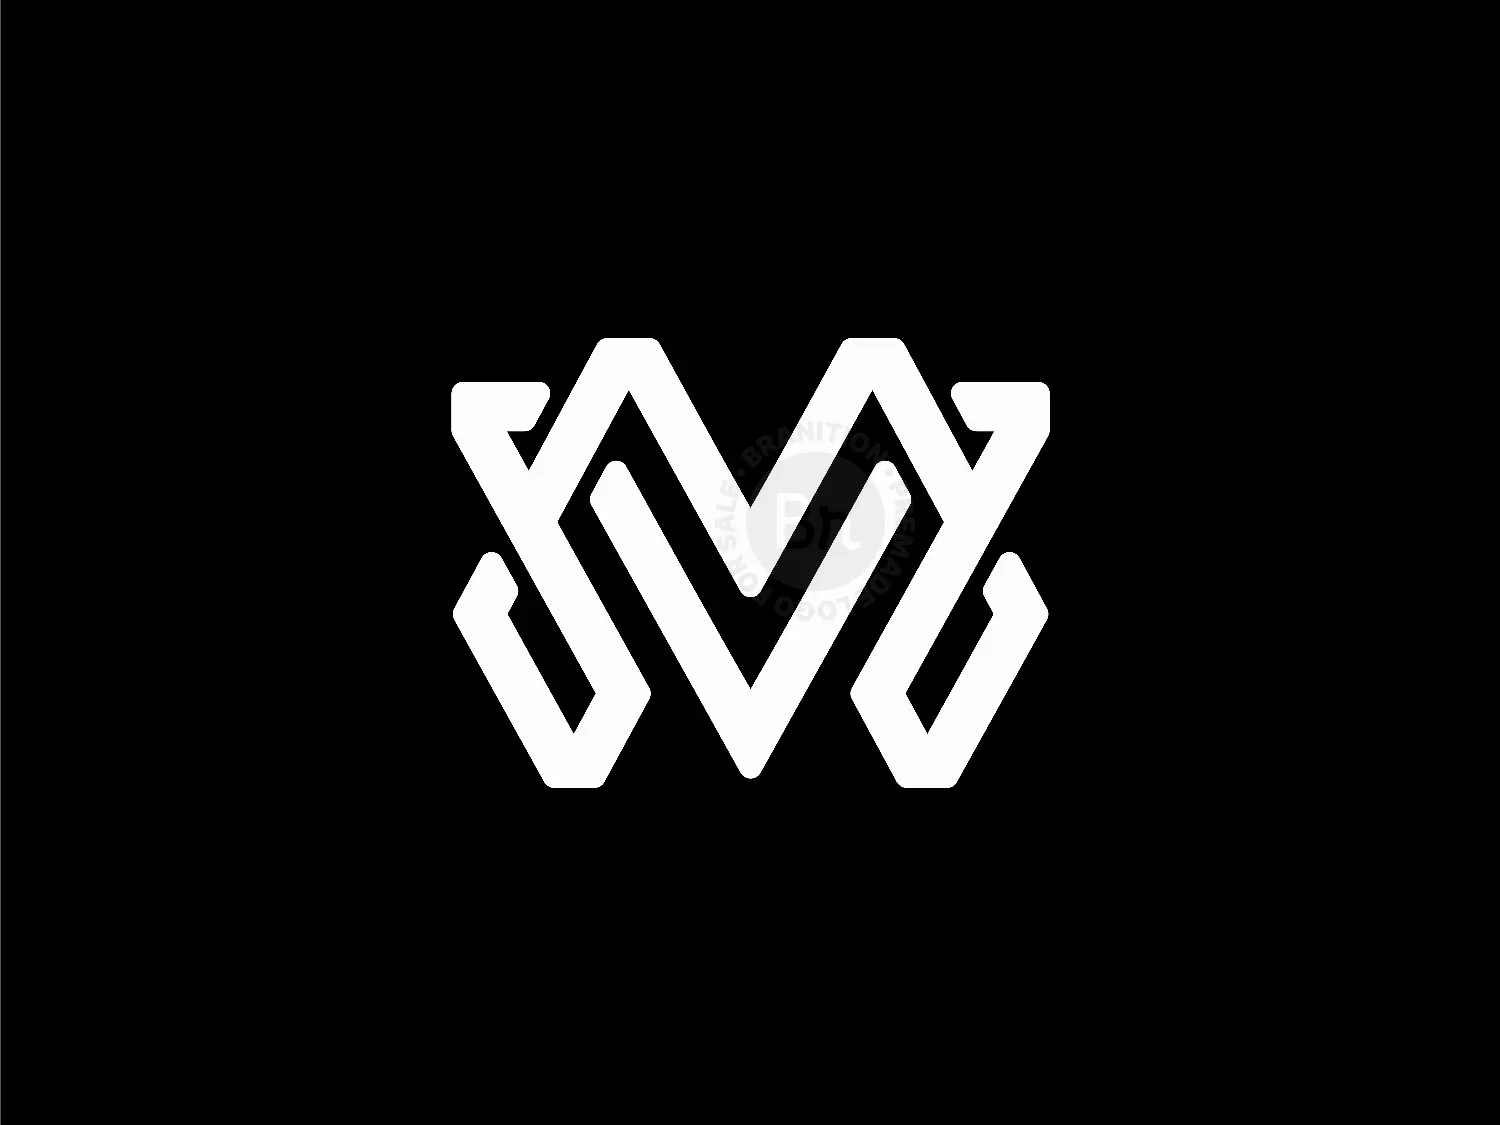 VM logo monogram emblem style with crown shape design template 4235636  Vector Art at Vecteezy